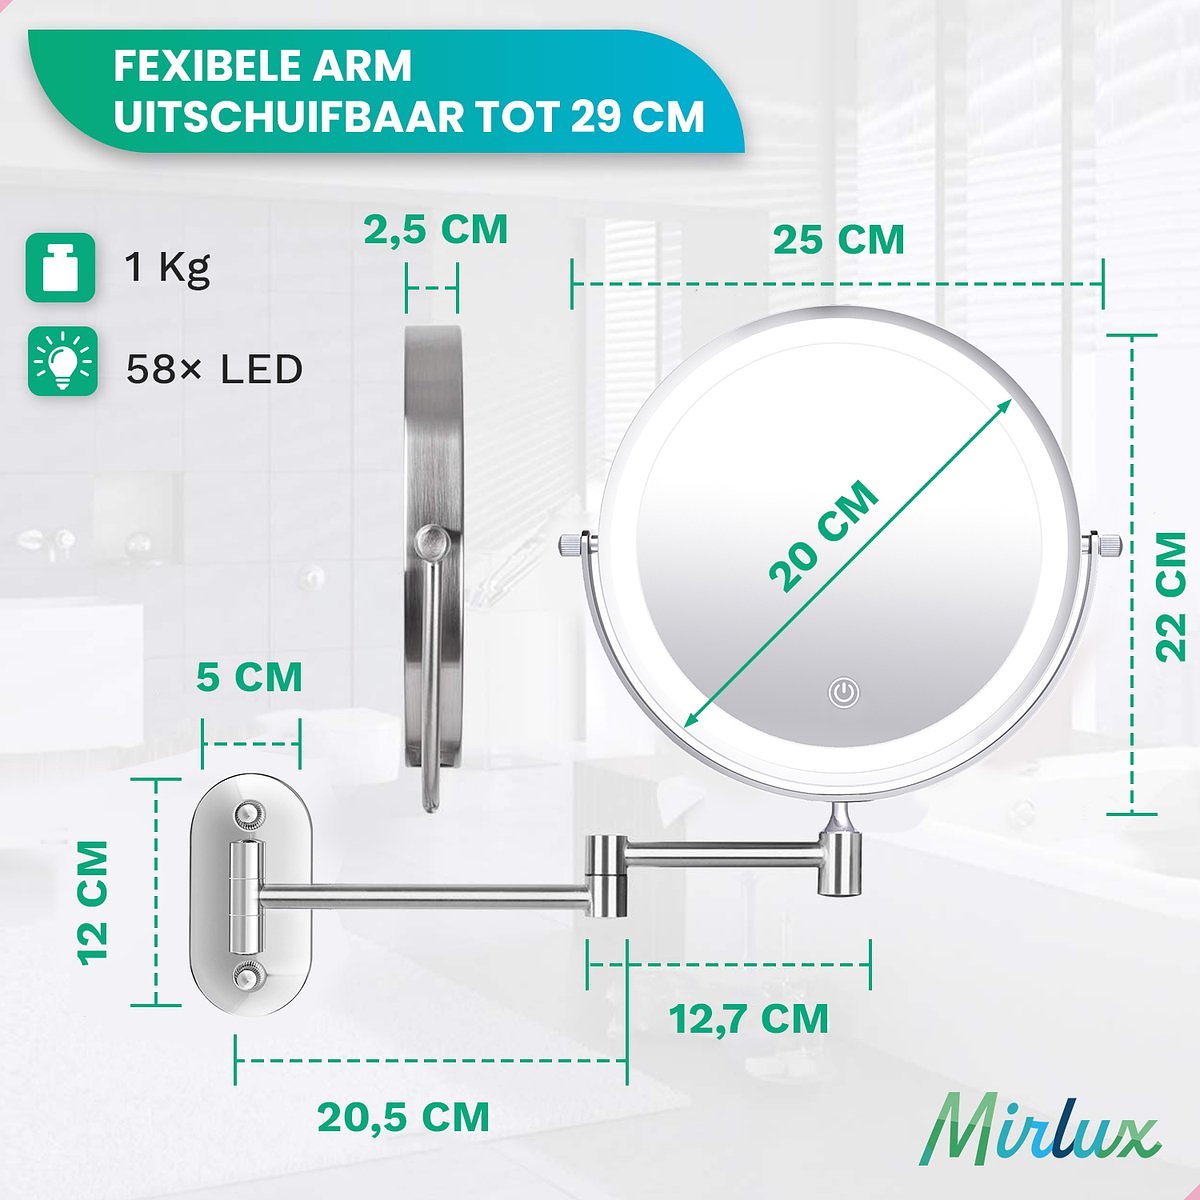 Mirlux Make Up Spiegel met LED Verlichting - 10X Vergroting - Chroom